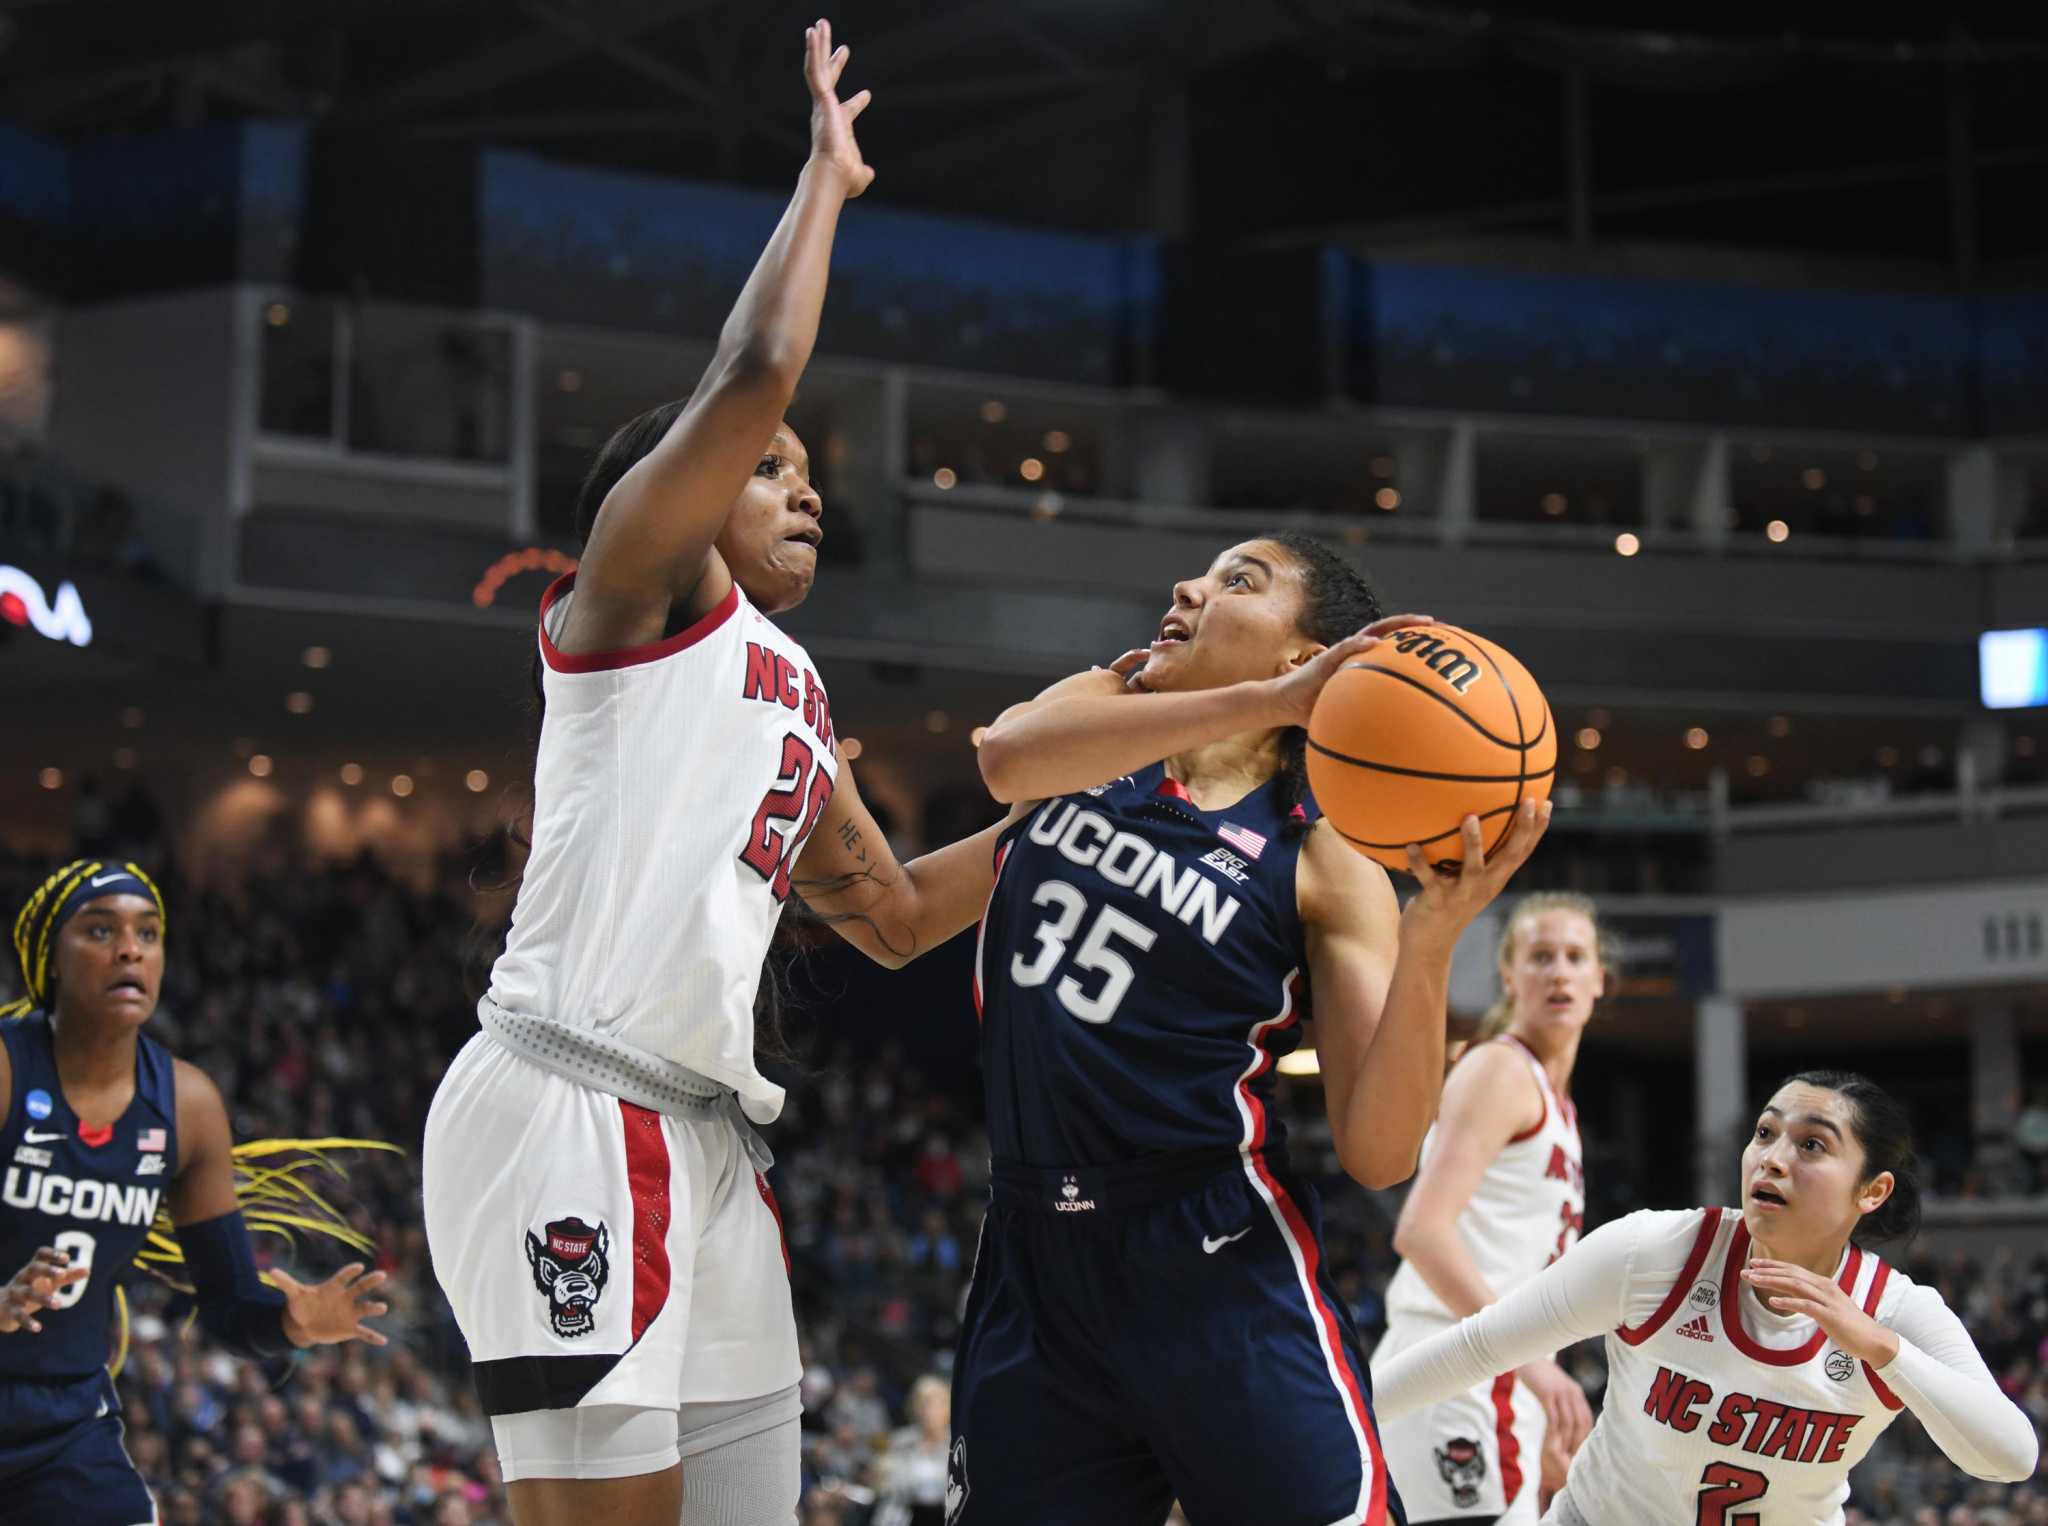 UConn women's basketball 202223 schedule is announced